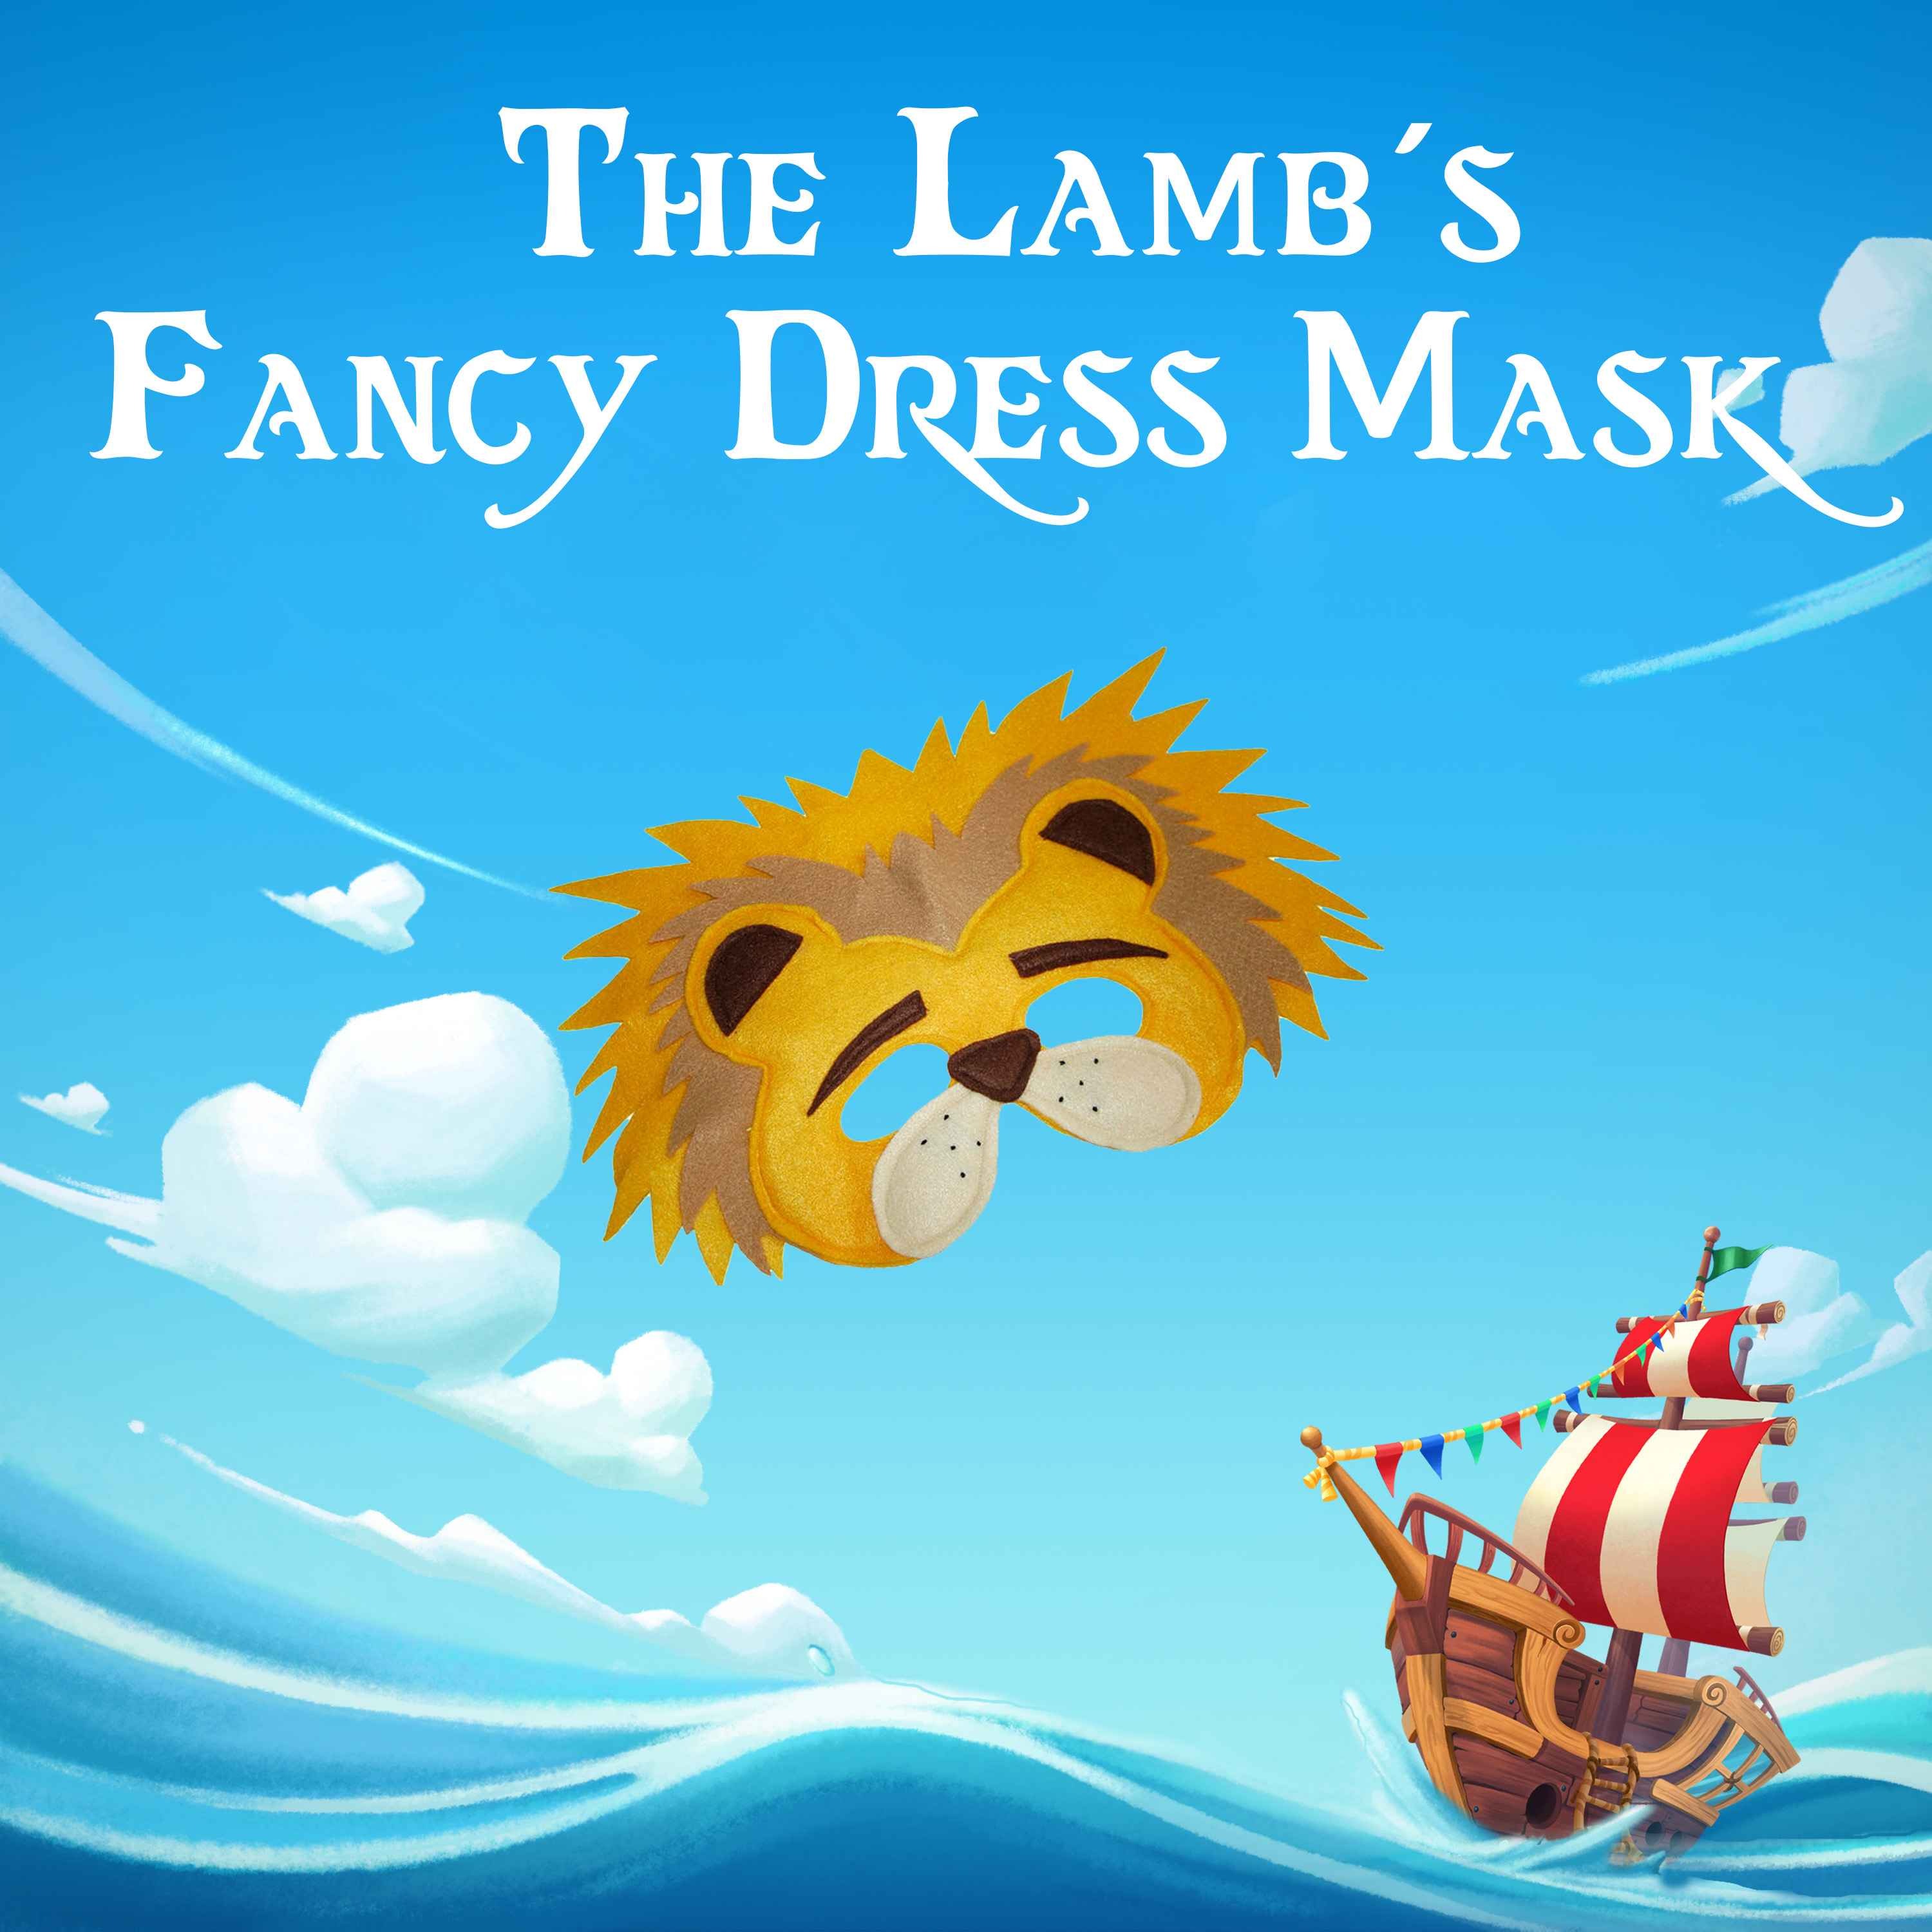 The Lamb's Fancy Dress Mask